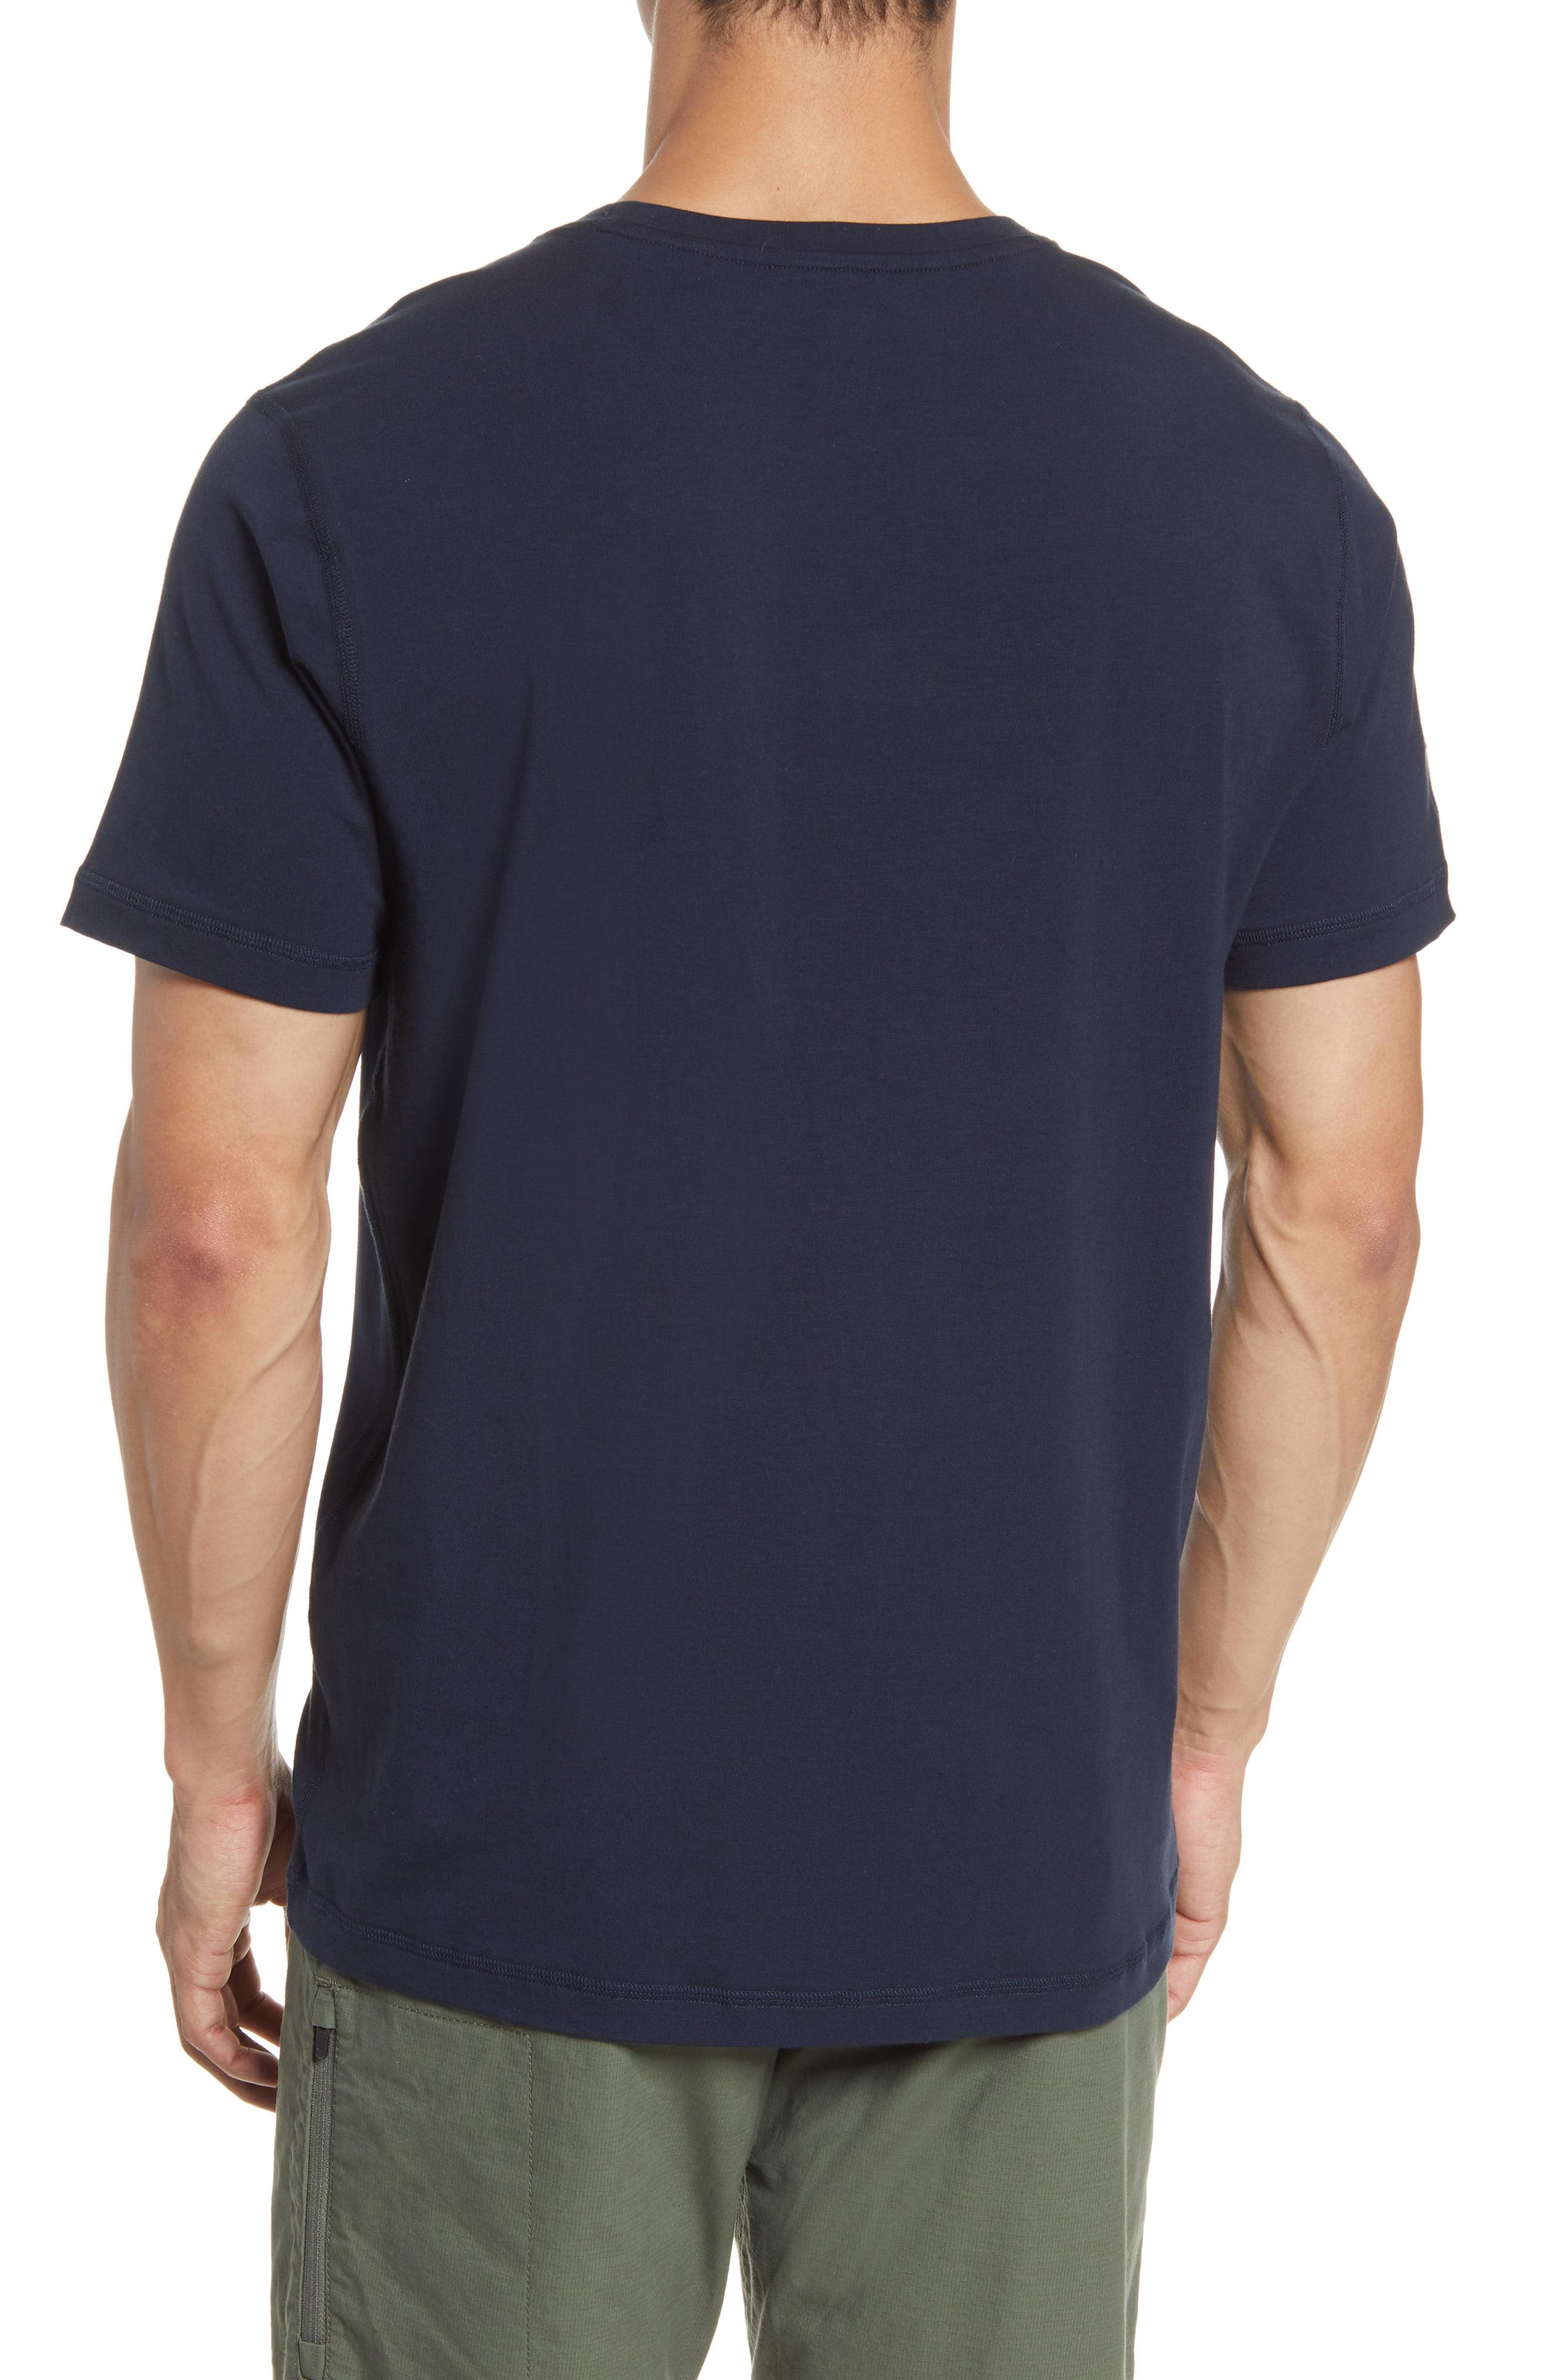 Vuori Cotton Tuvalo Crewneck T-shirt in Blue for Men - Lyst